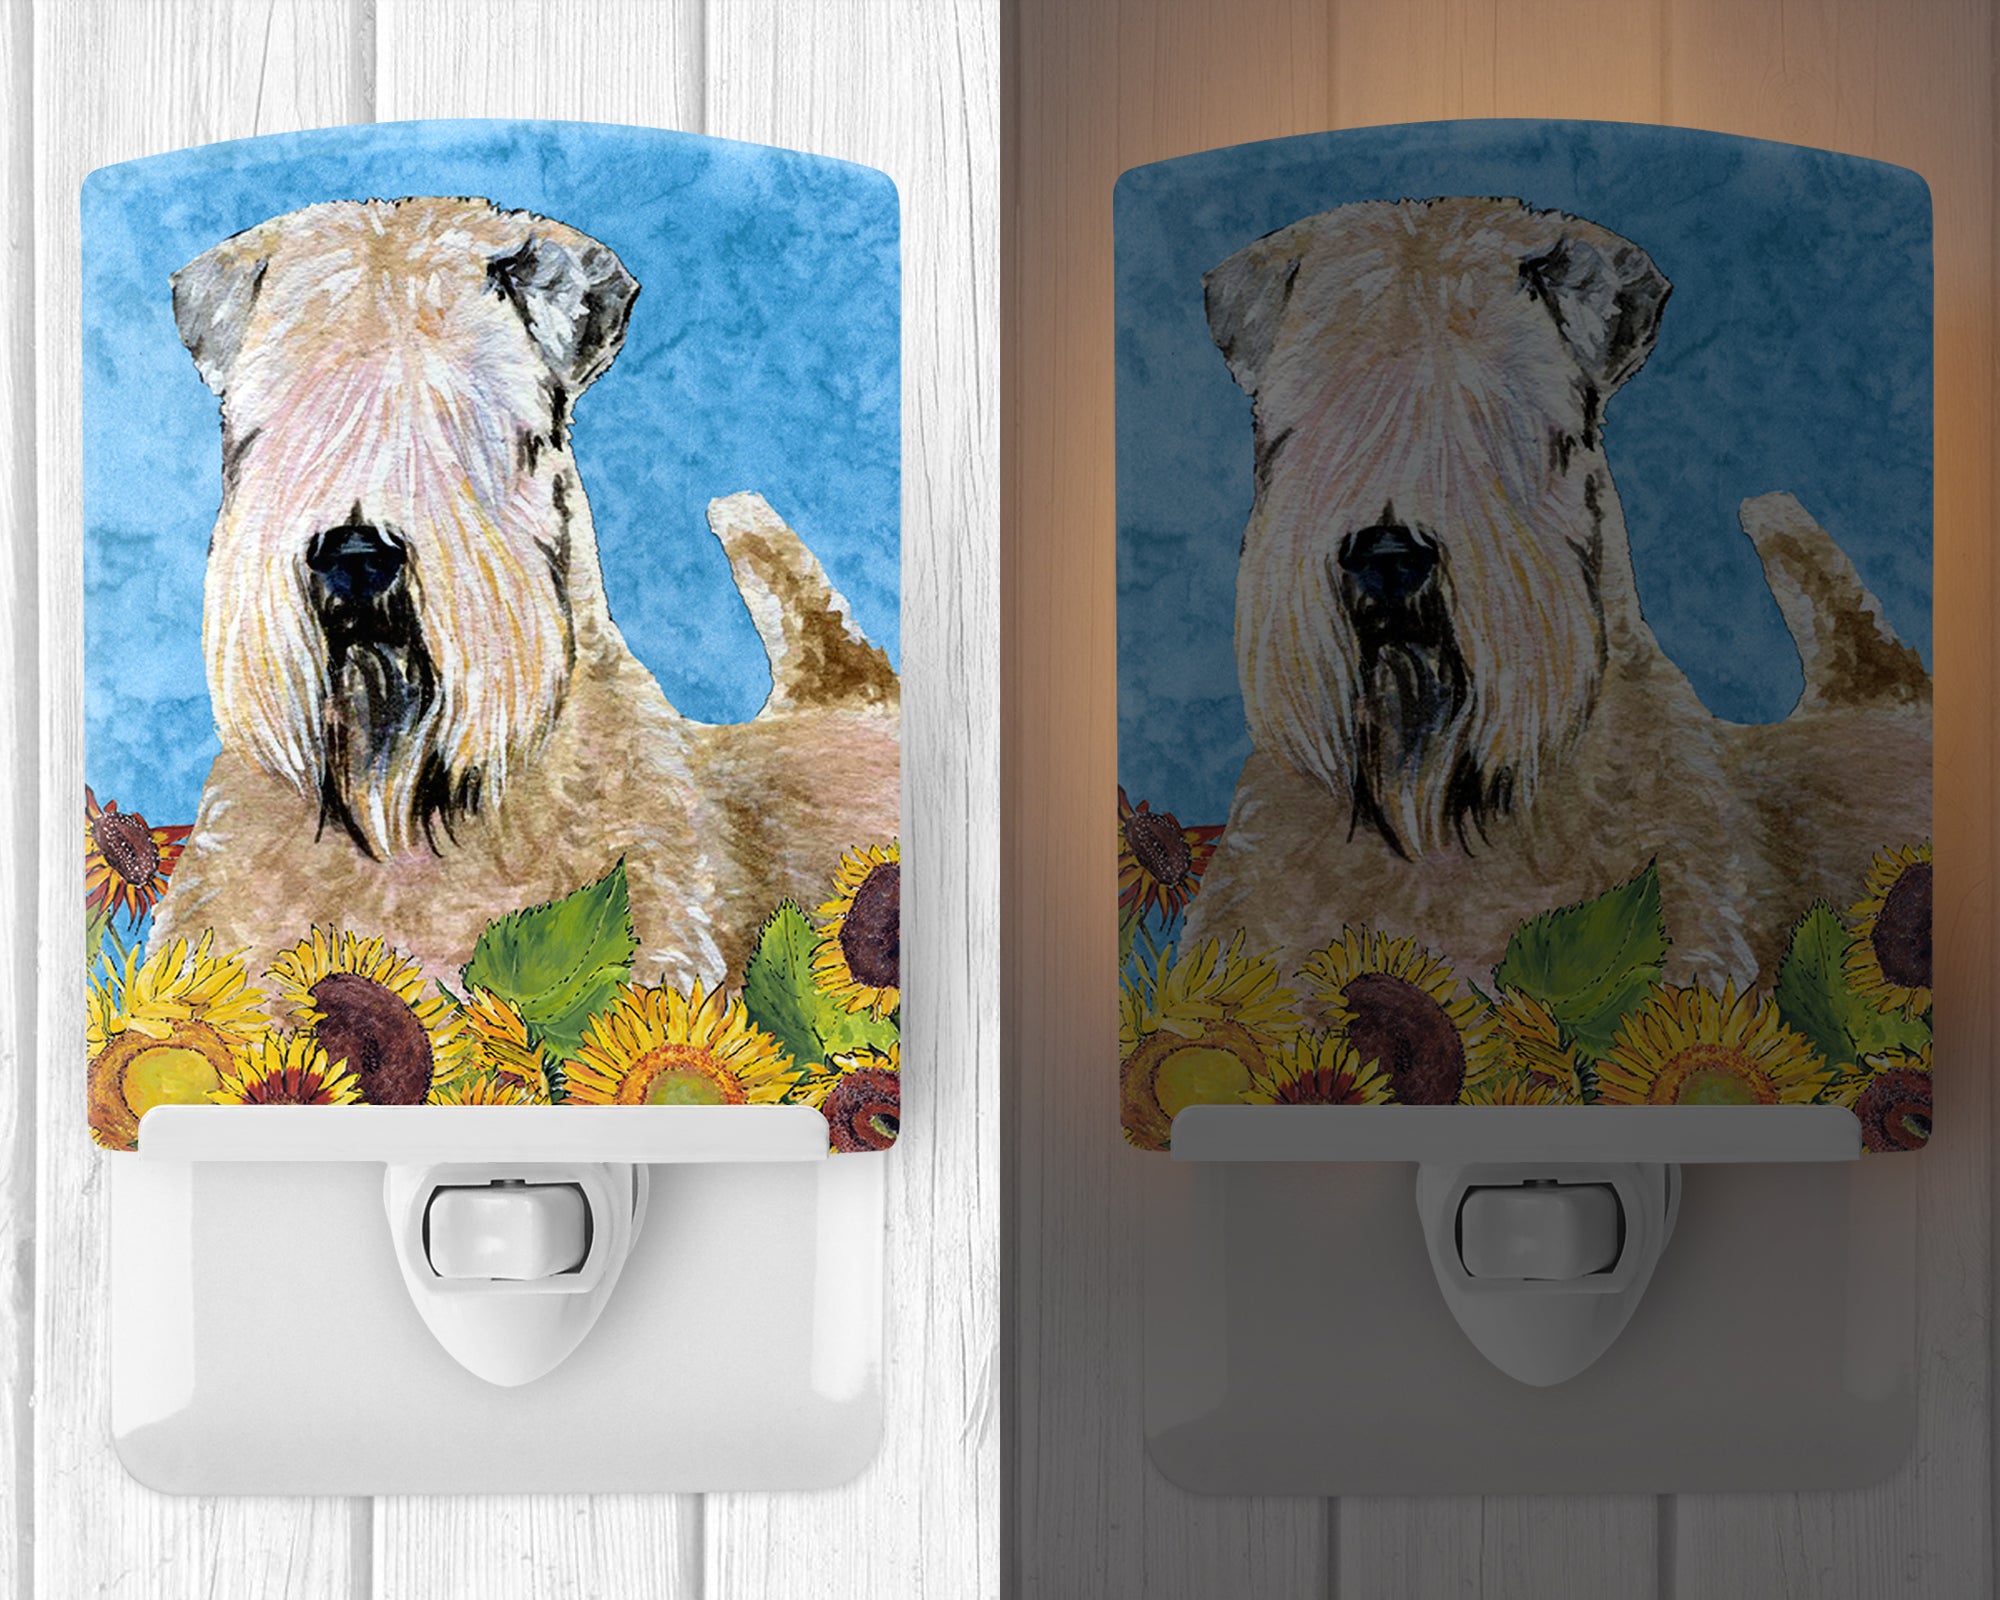 Wheaten Terrier Soft Coated in Summer Flowers Ceramic Night Light SS4121CNL - the-store.com